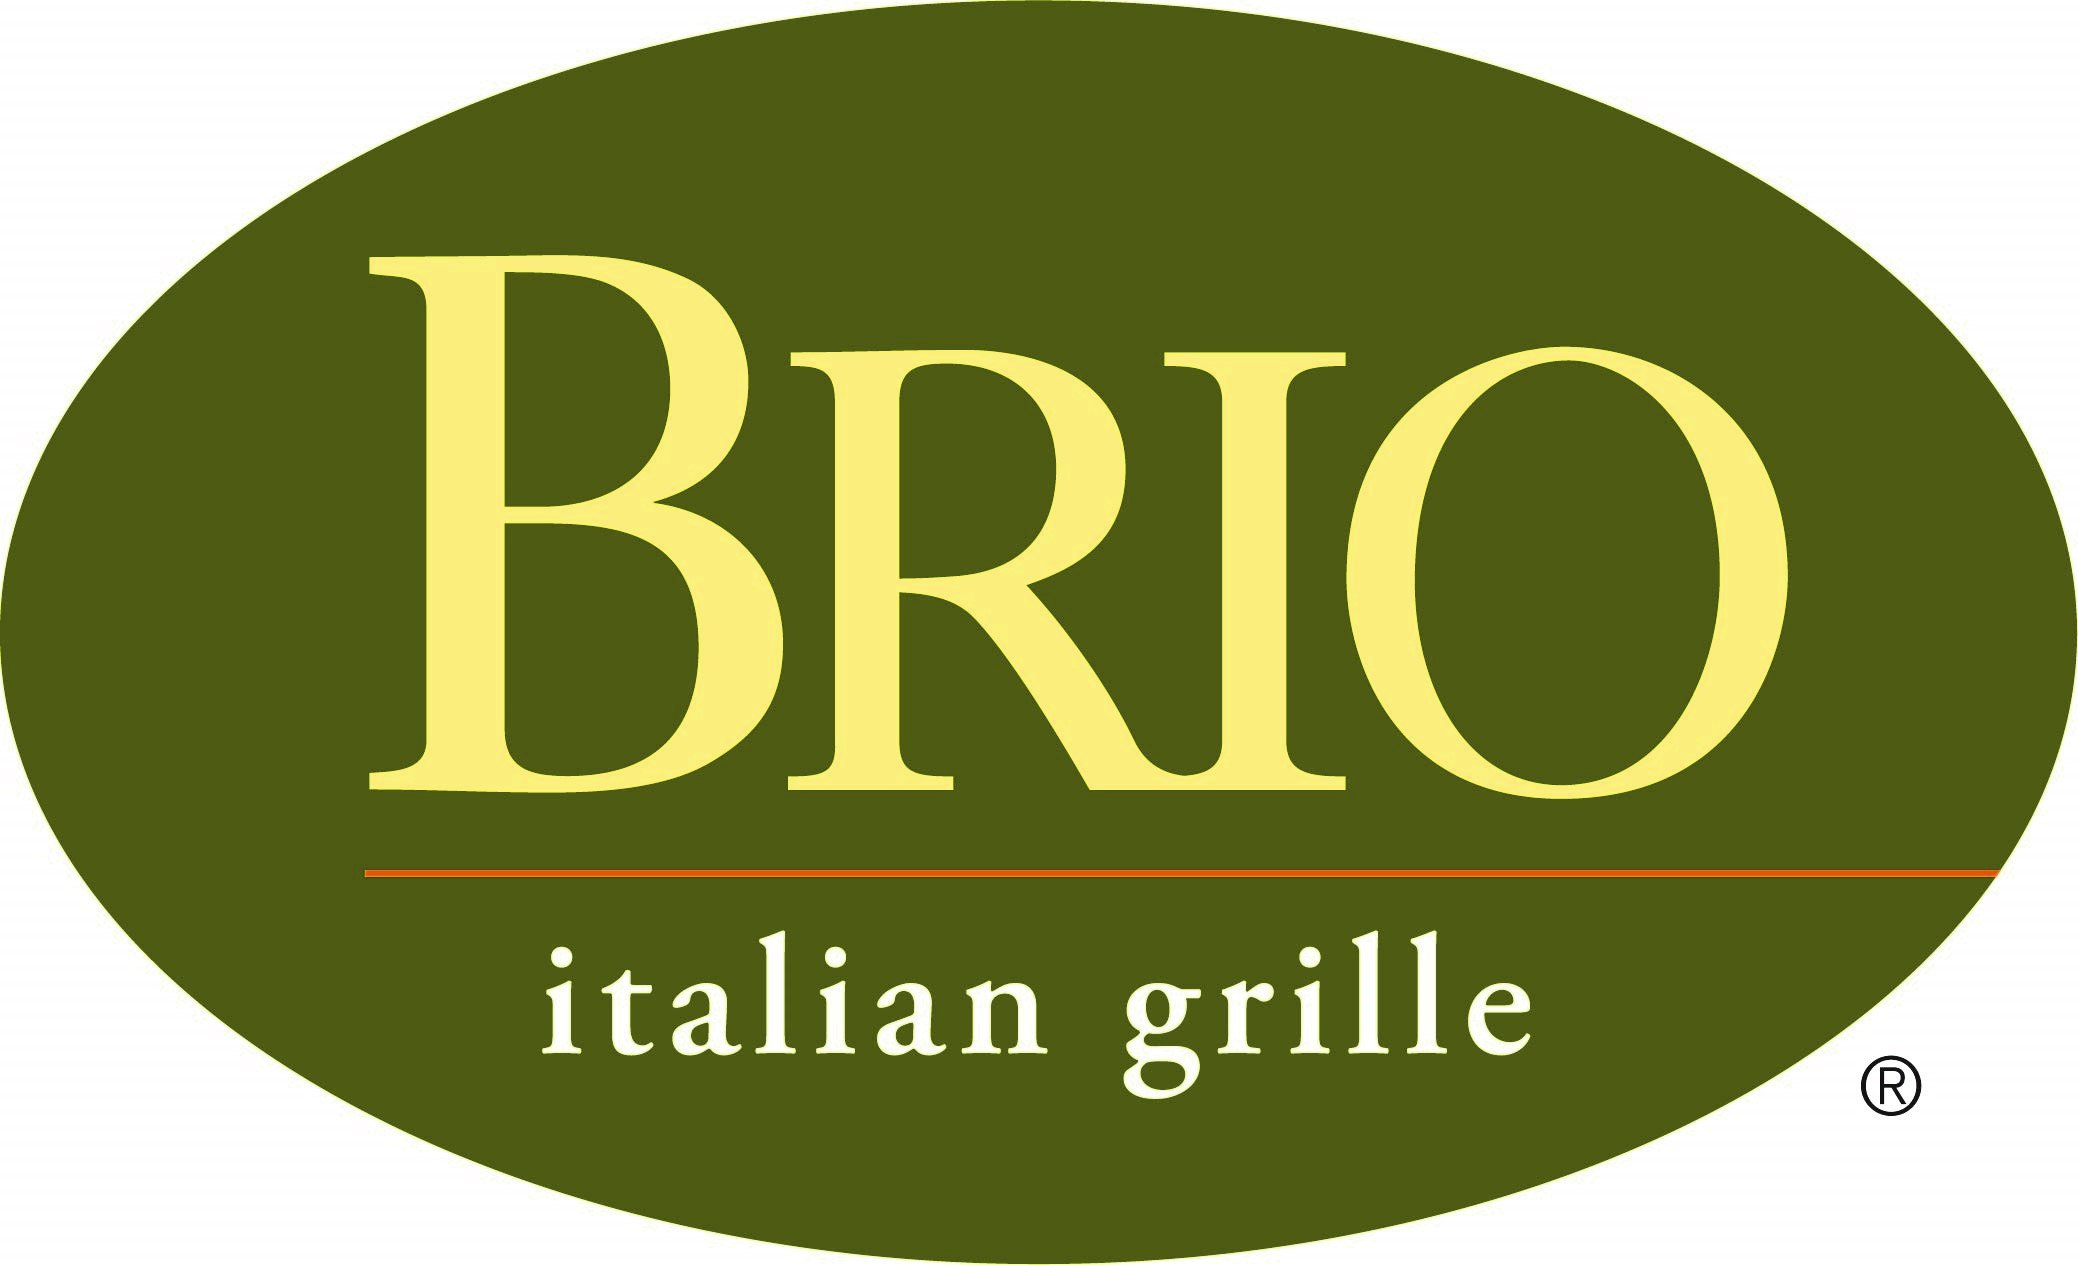 BRIO Italian Grille